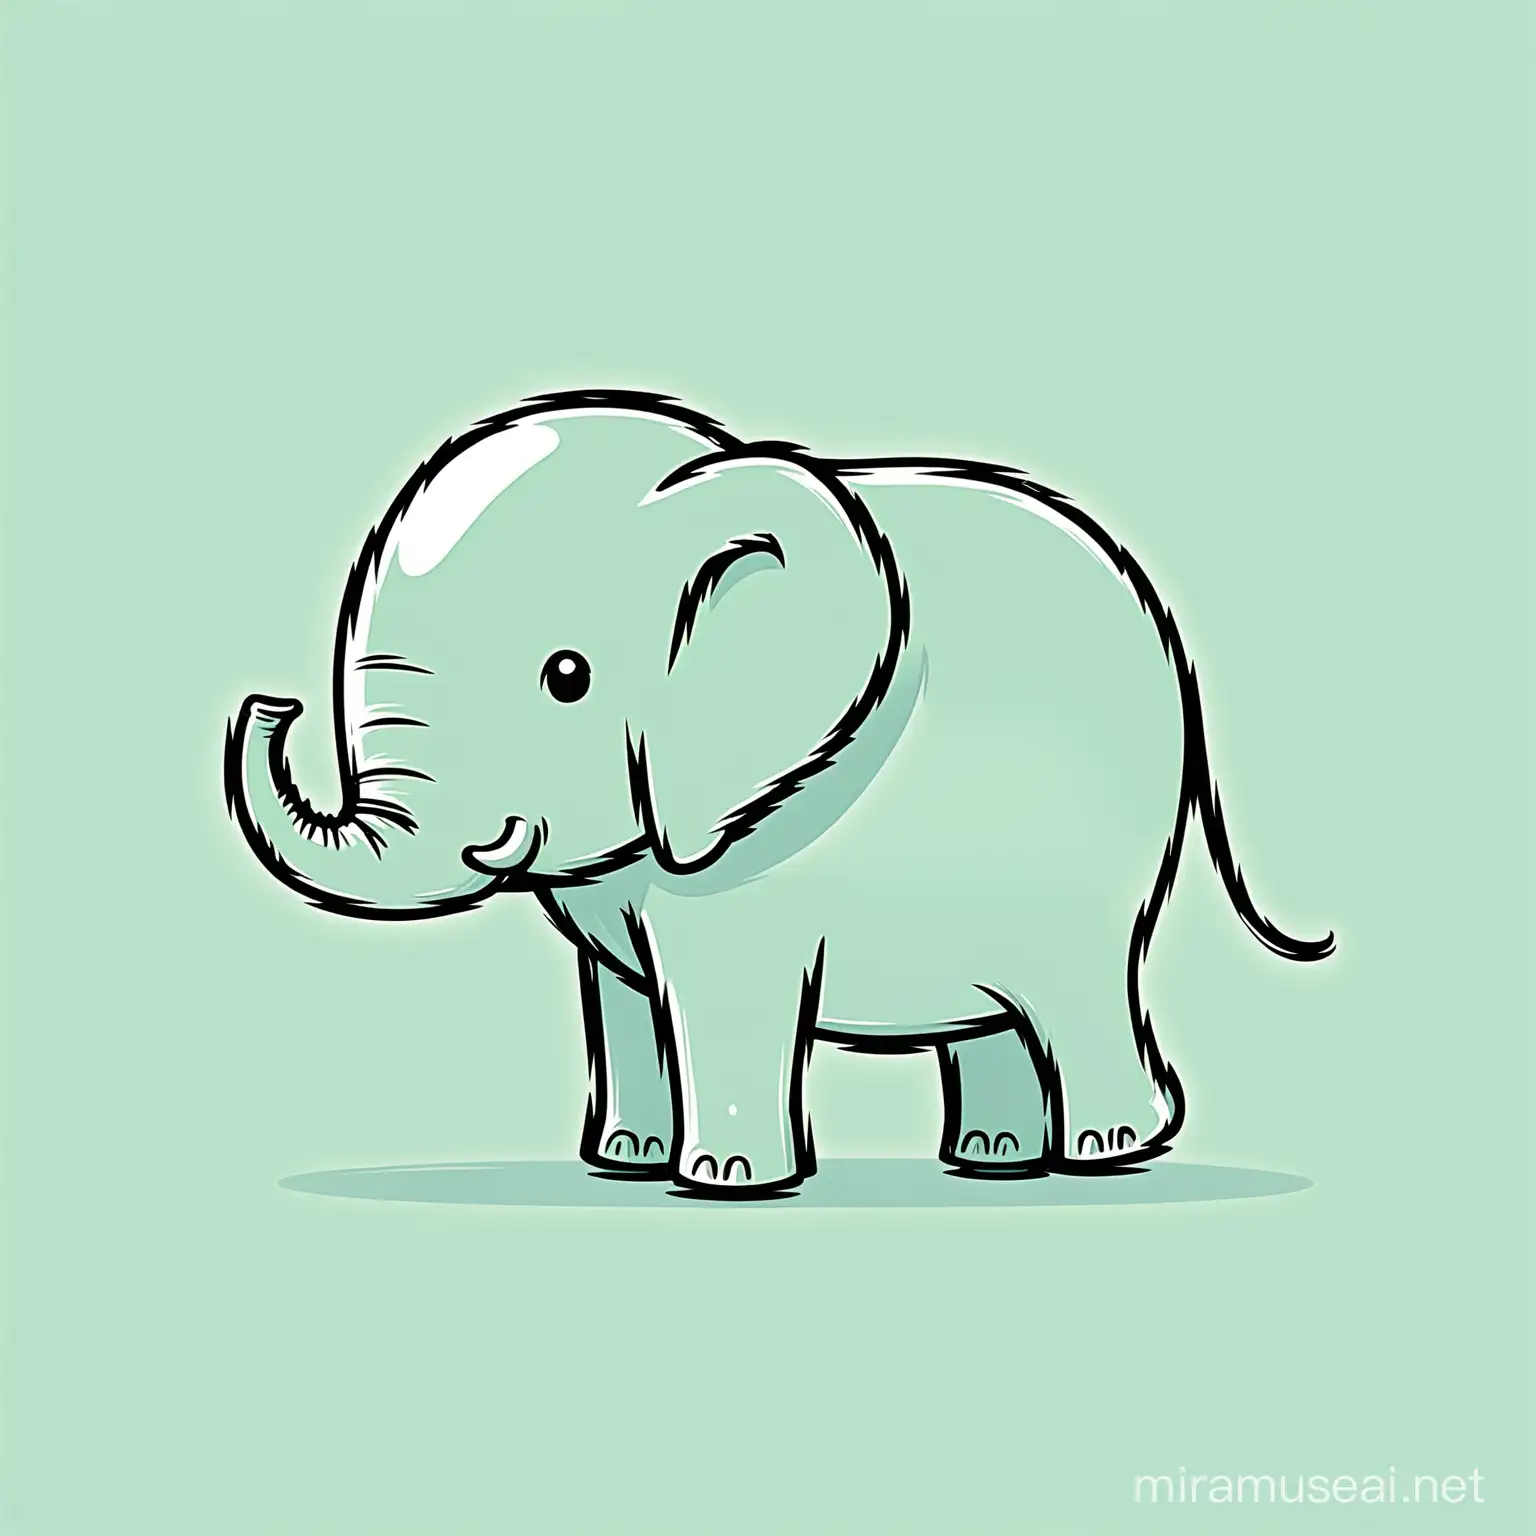 Minimalistic Line Art of a funny elephant